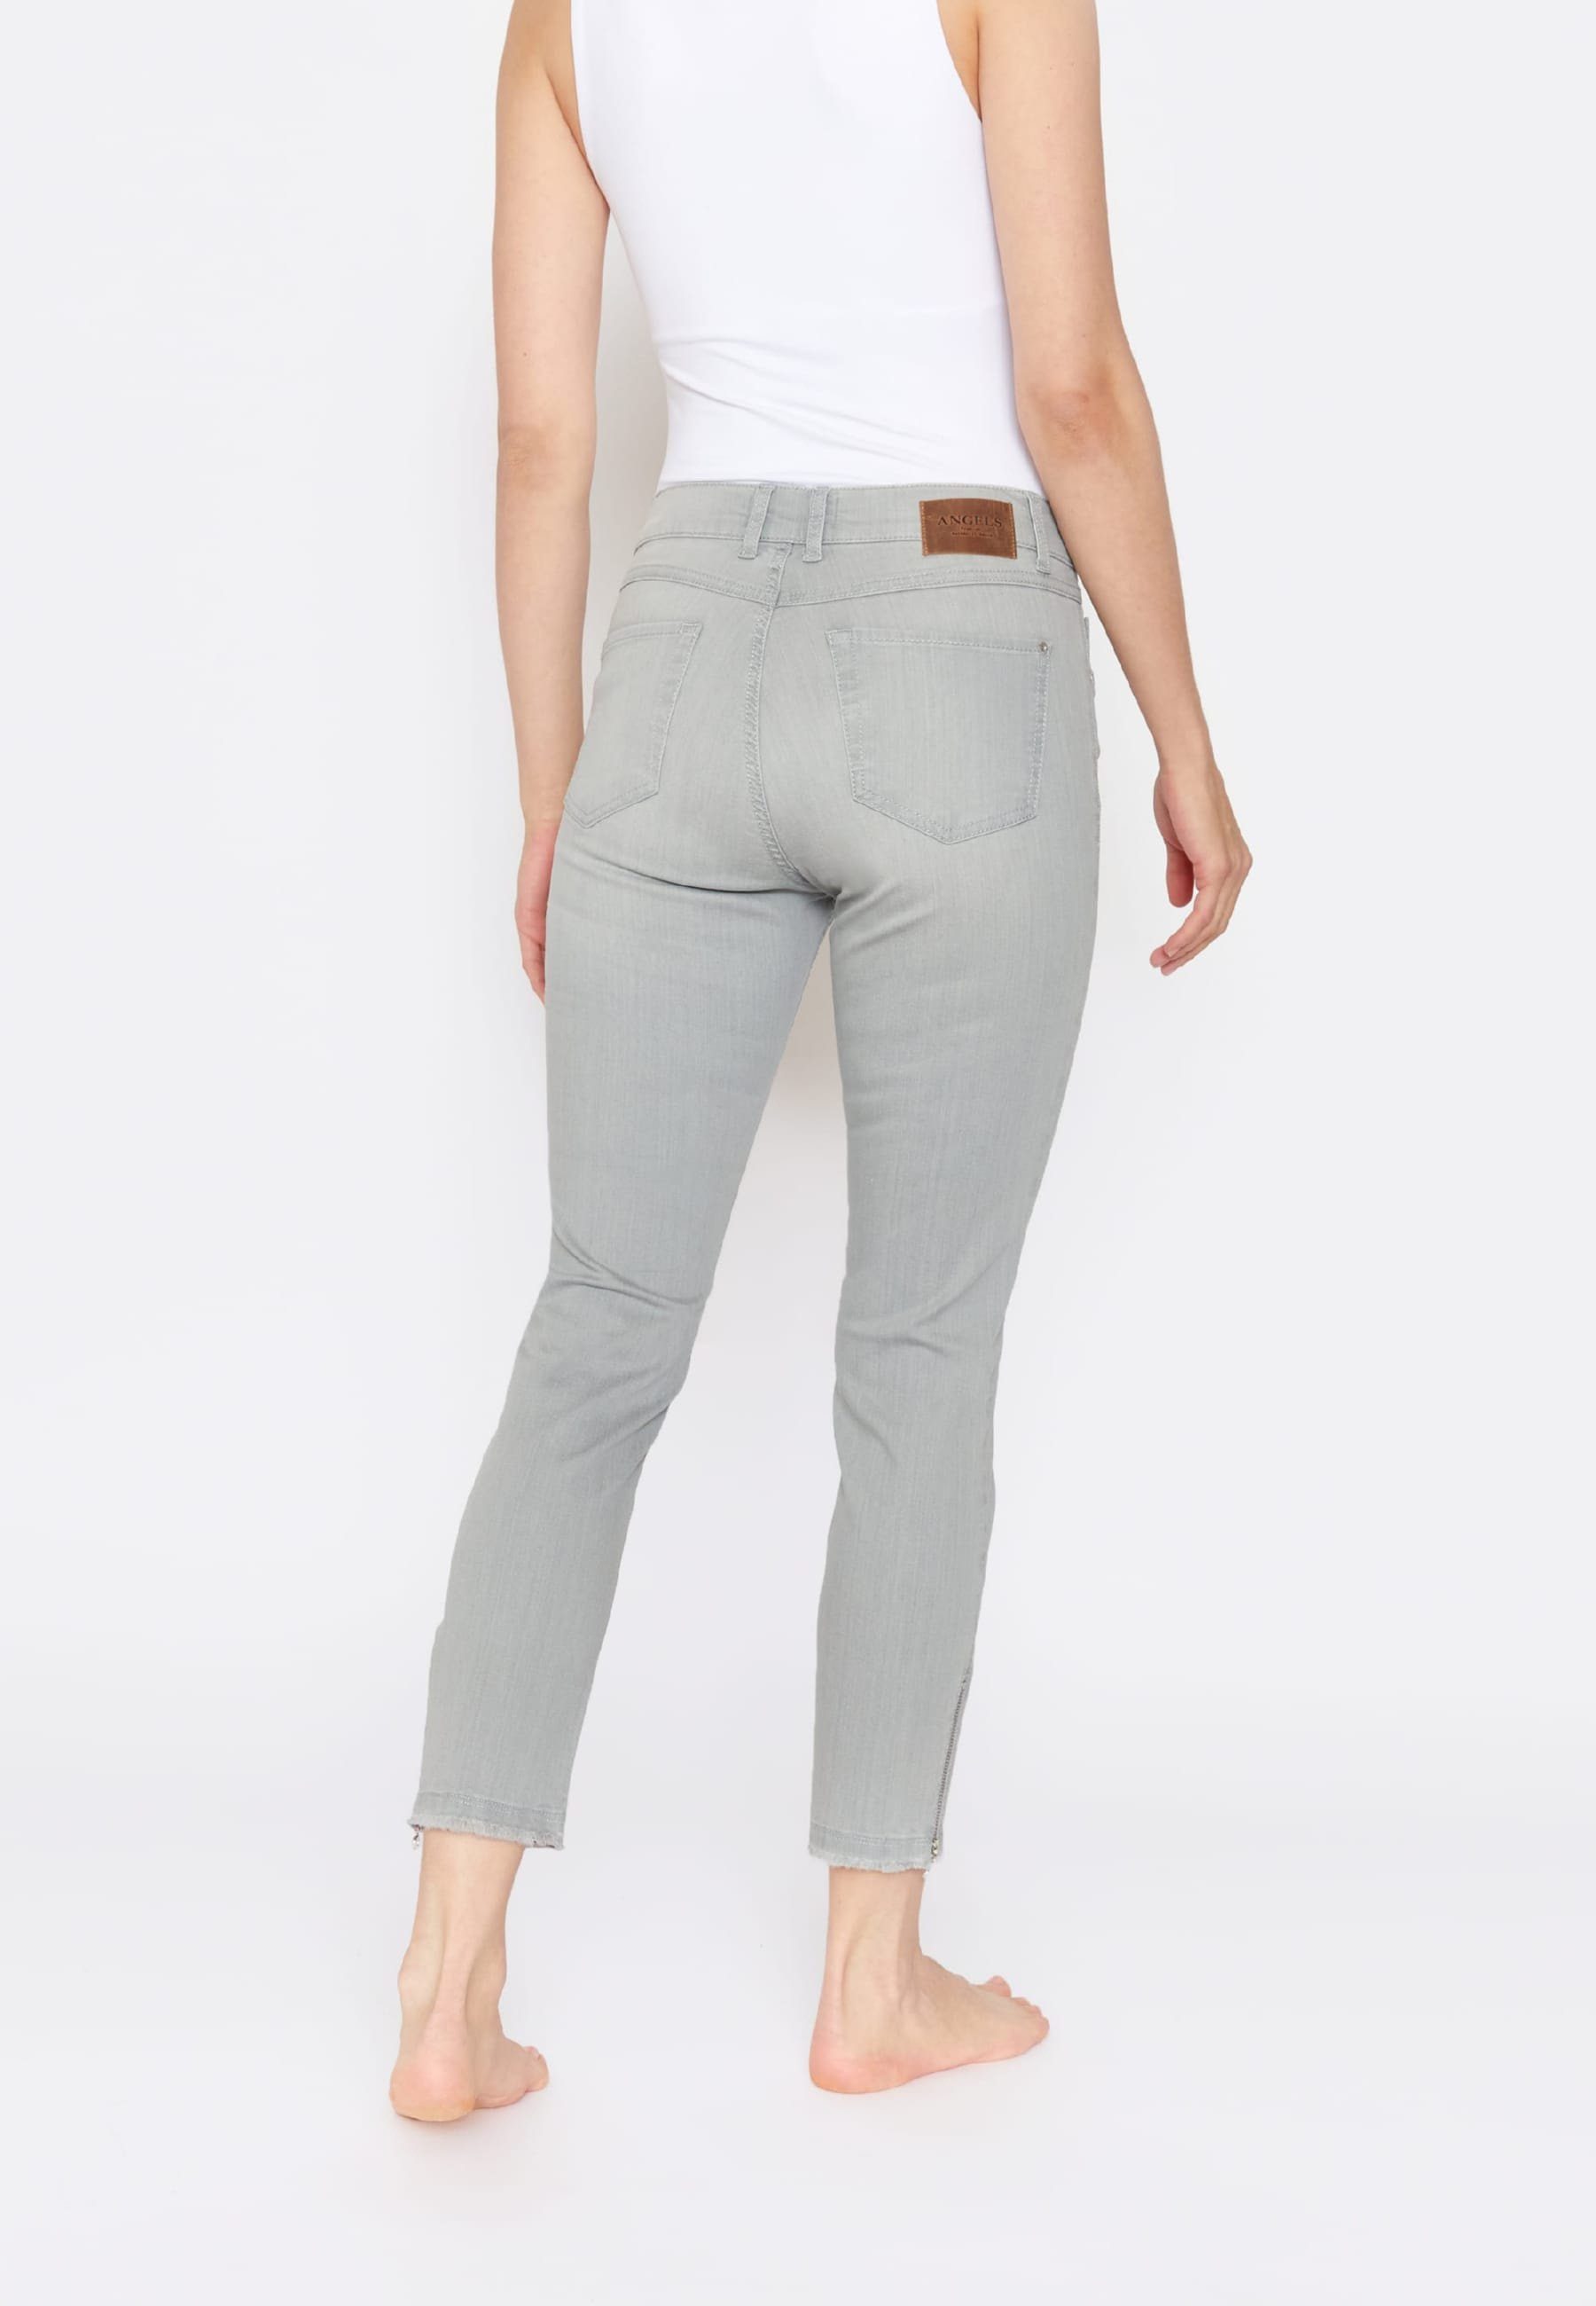 Ankle mit Slim-fit-Jeans Label-Applikationen Fringe hellgrau ANGELS Slim-Jeans Zip Skinny